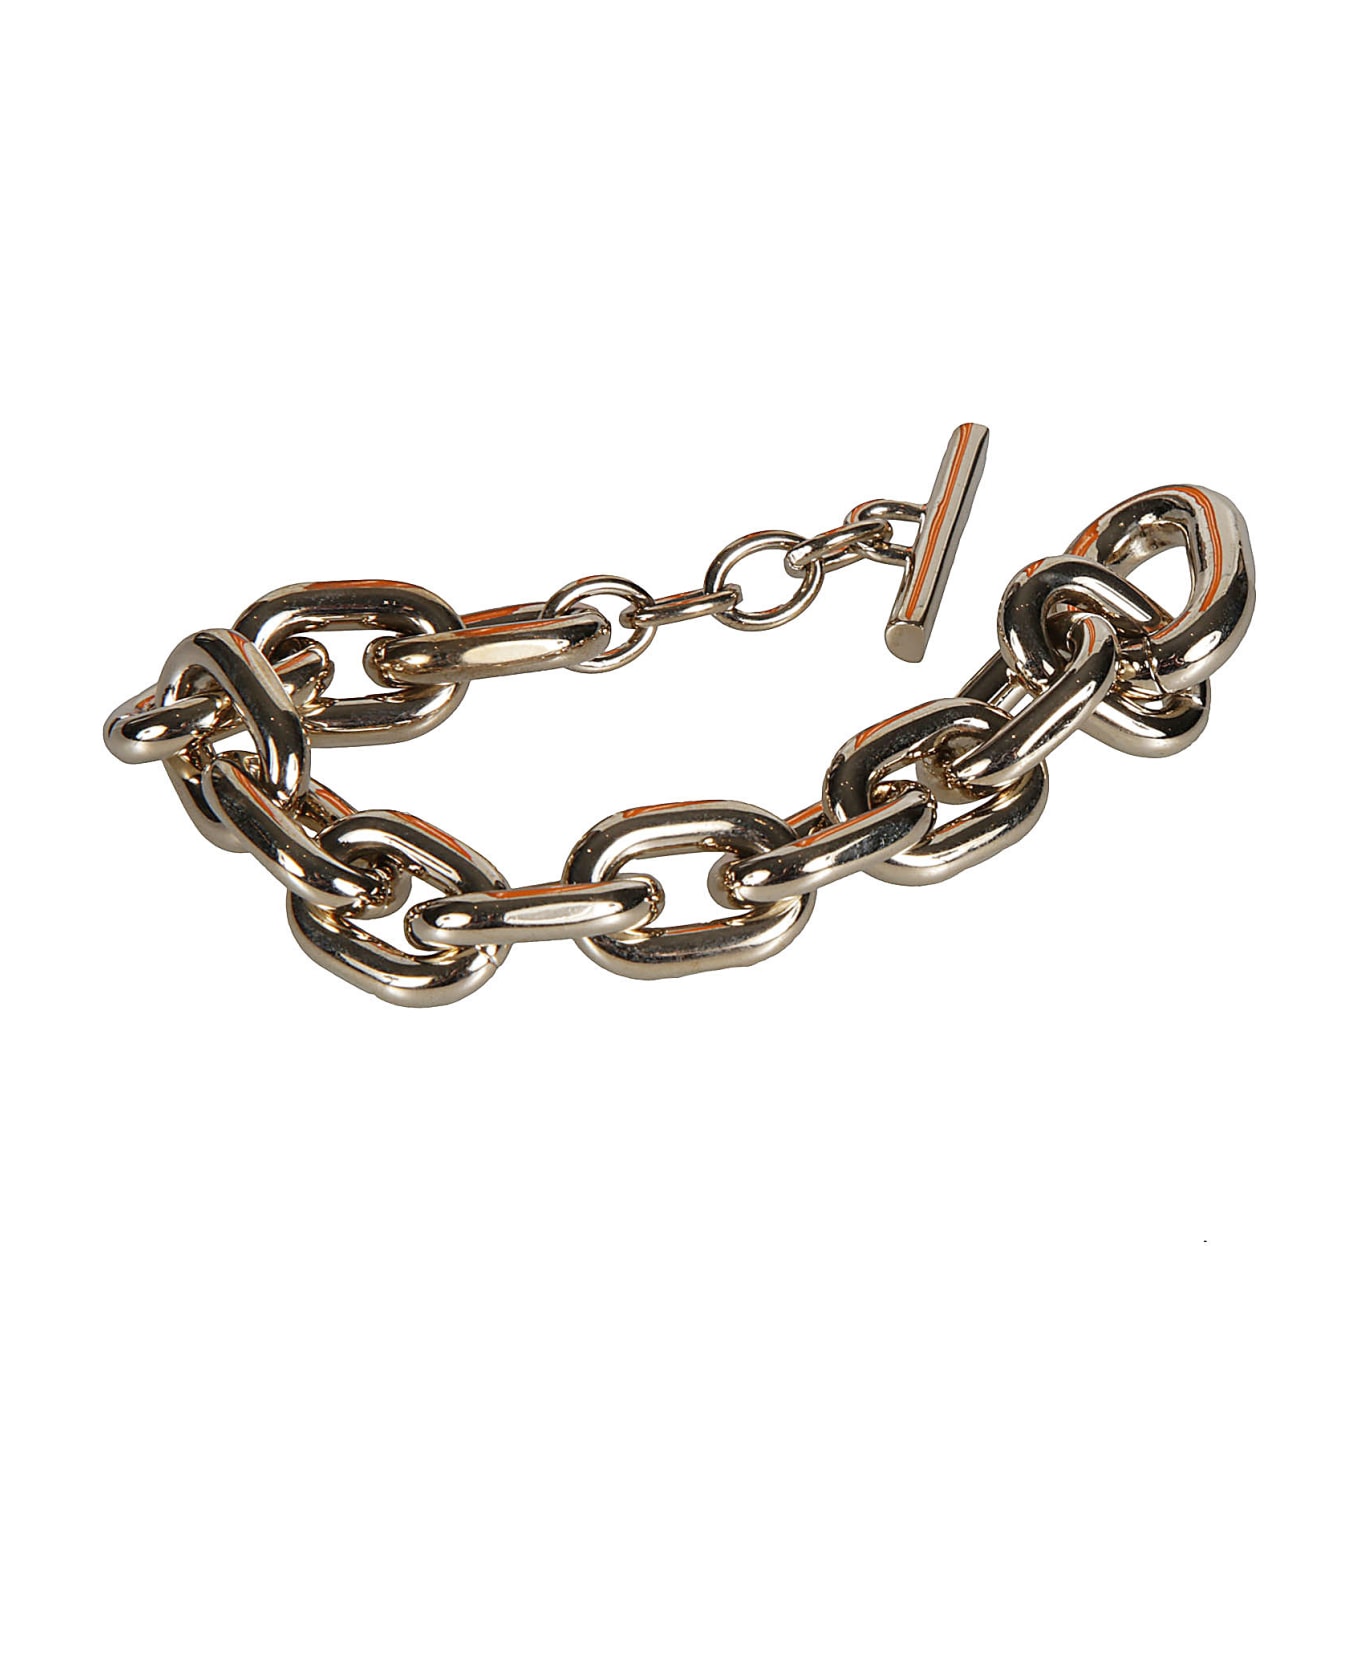 Paco Rabanne Chain Bracelet - Gold